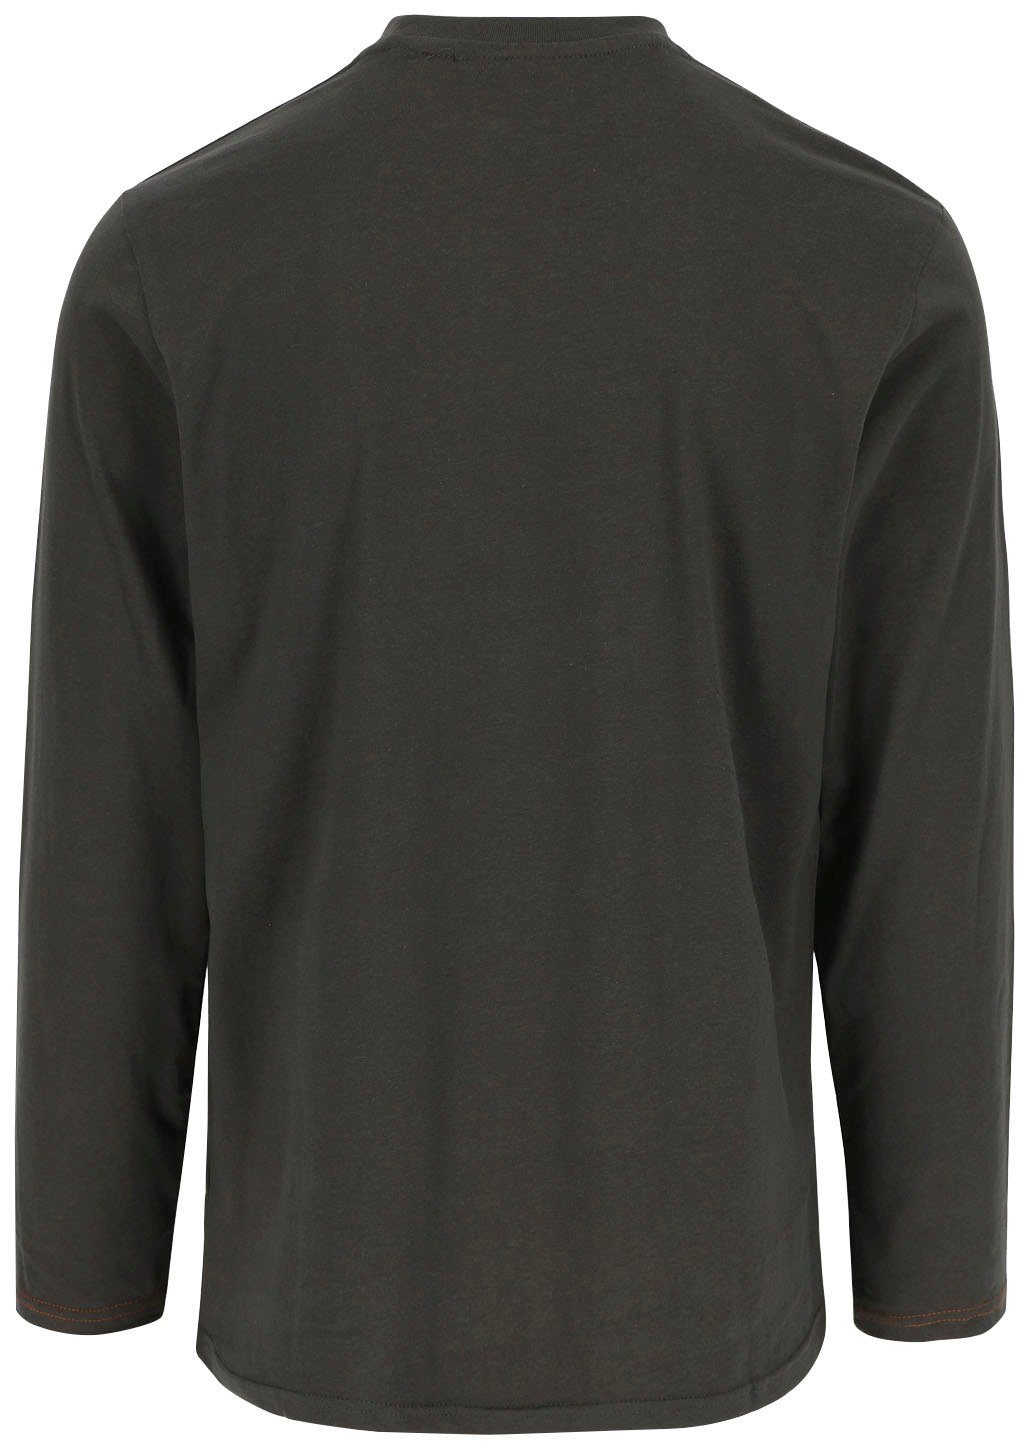 Baumwolle, % vorgeschrumpfte Basic Langarmshirt Tragegefühl, grau 100 angenehmes Herock langärmlig t-shirt Noet